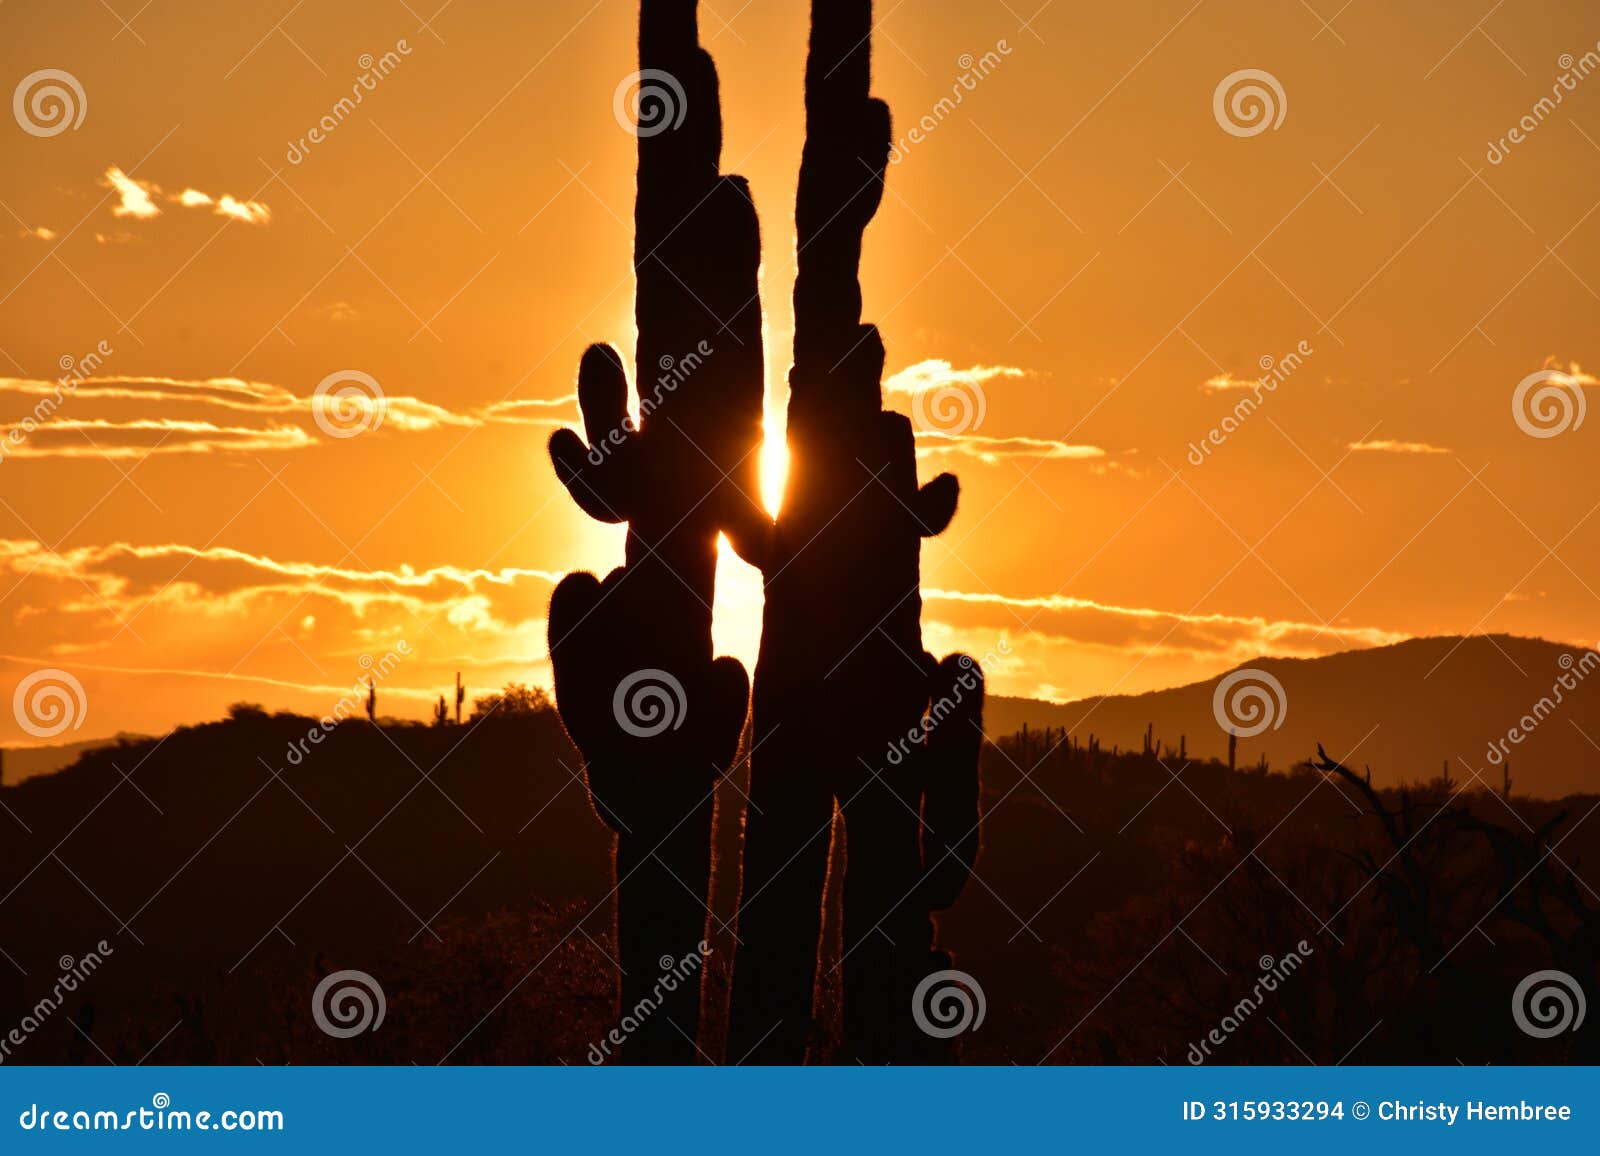 sonoran desert saguaro cactus couple embrace the sunrise, tonopah, arizona